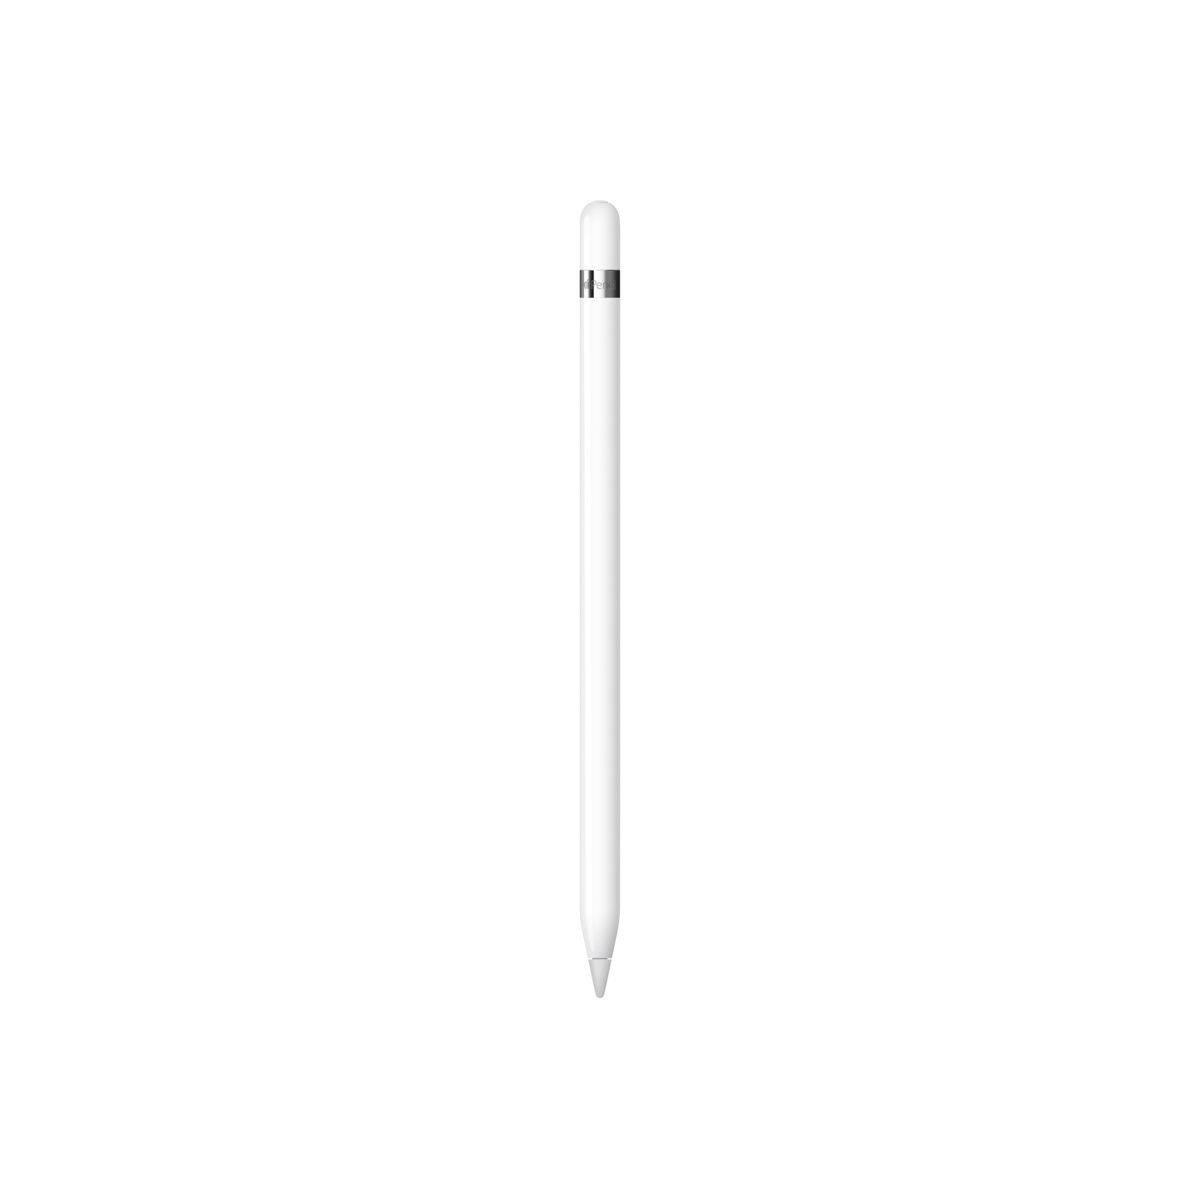 Apple Apple Pencil first generation